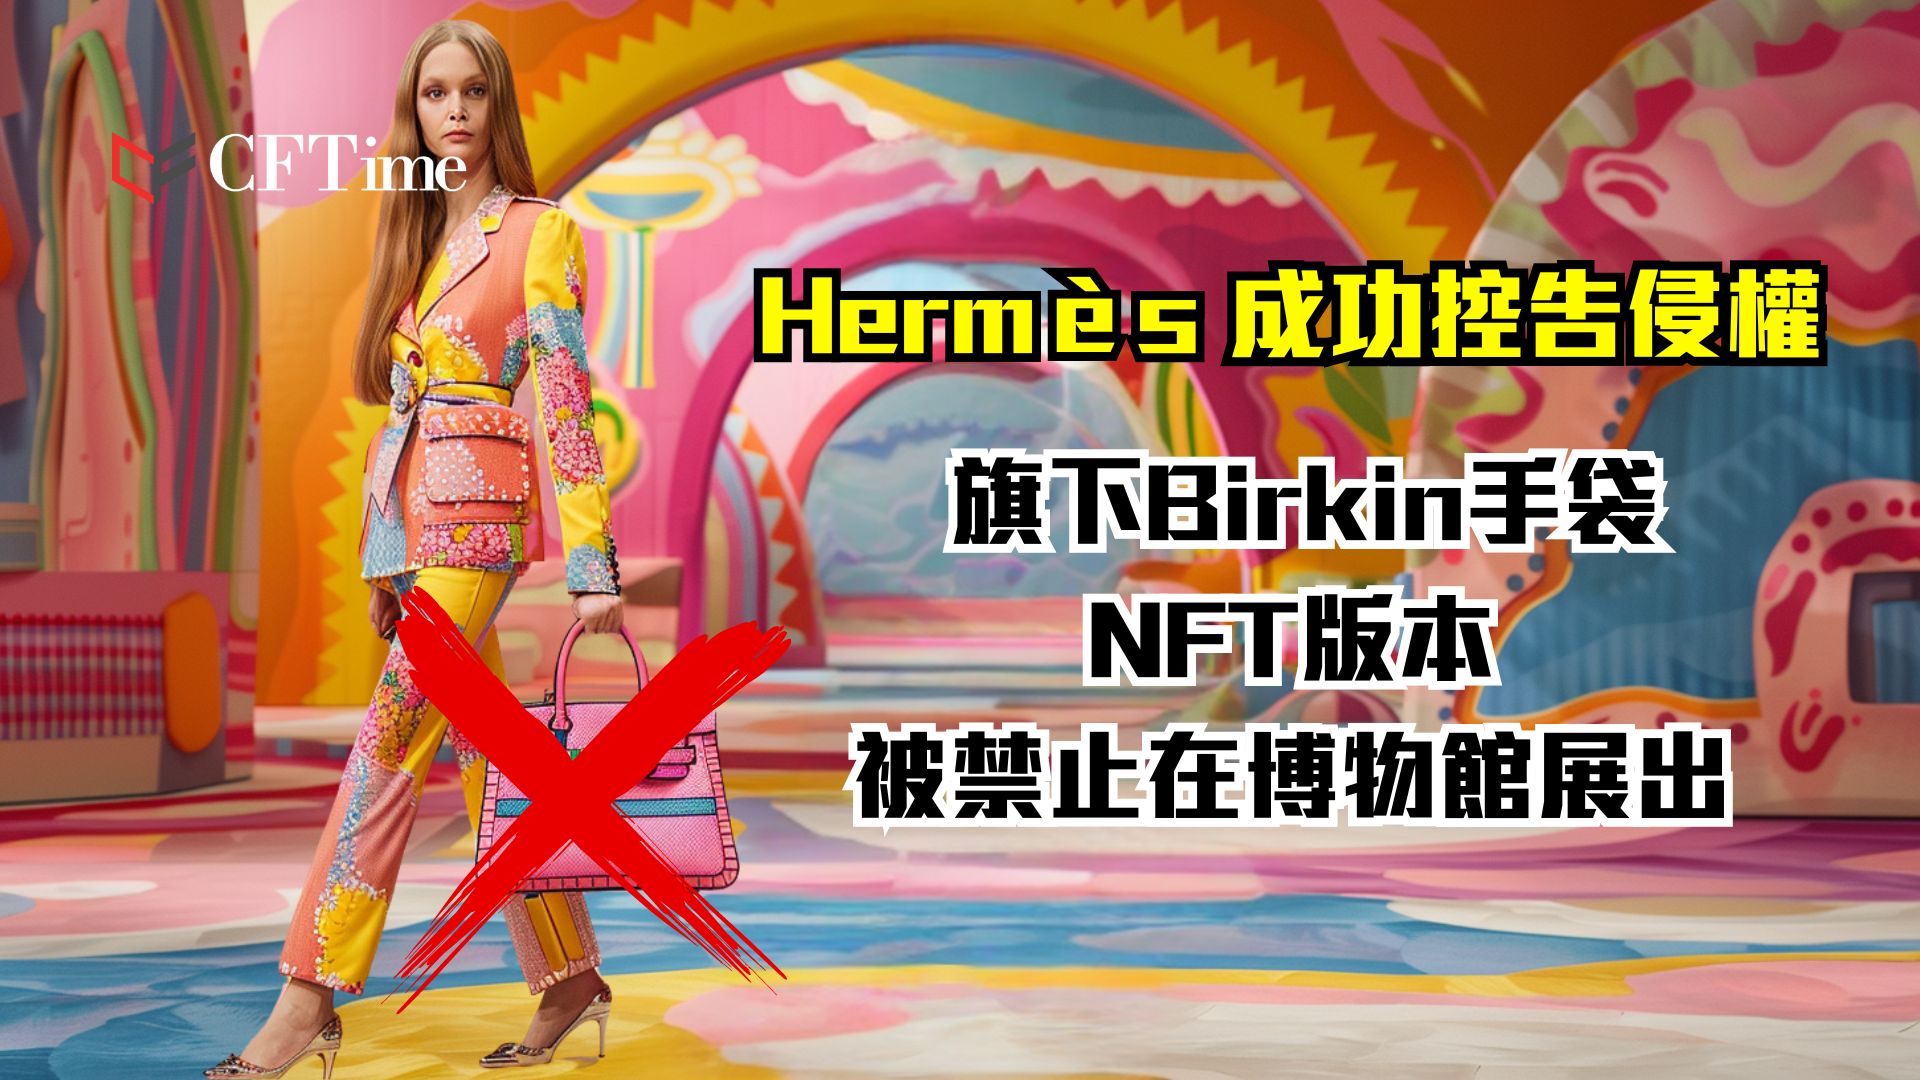 Hermès成功控告侵權